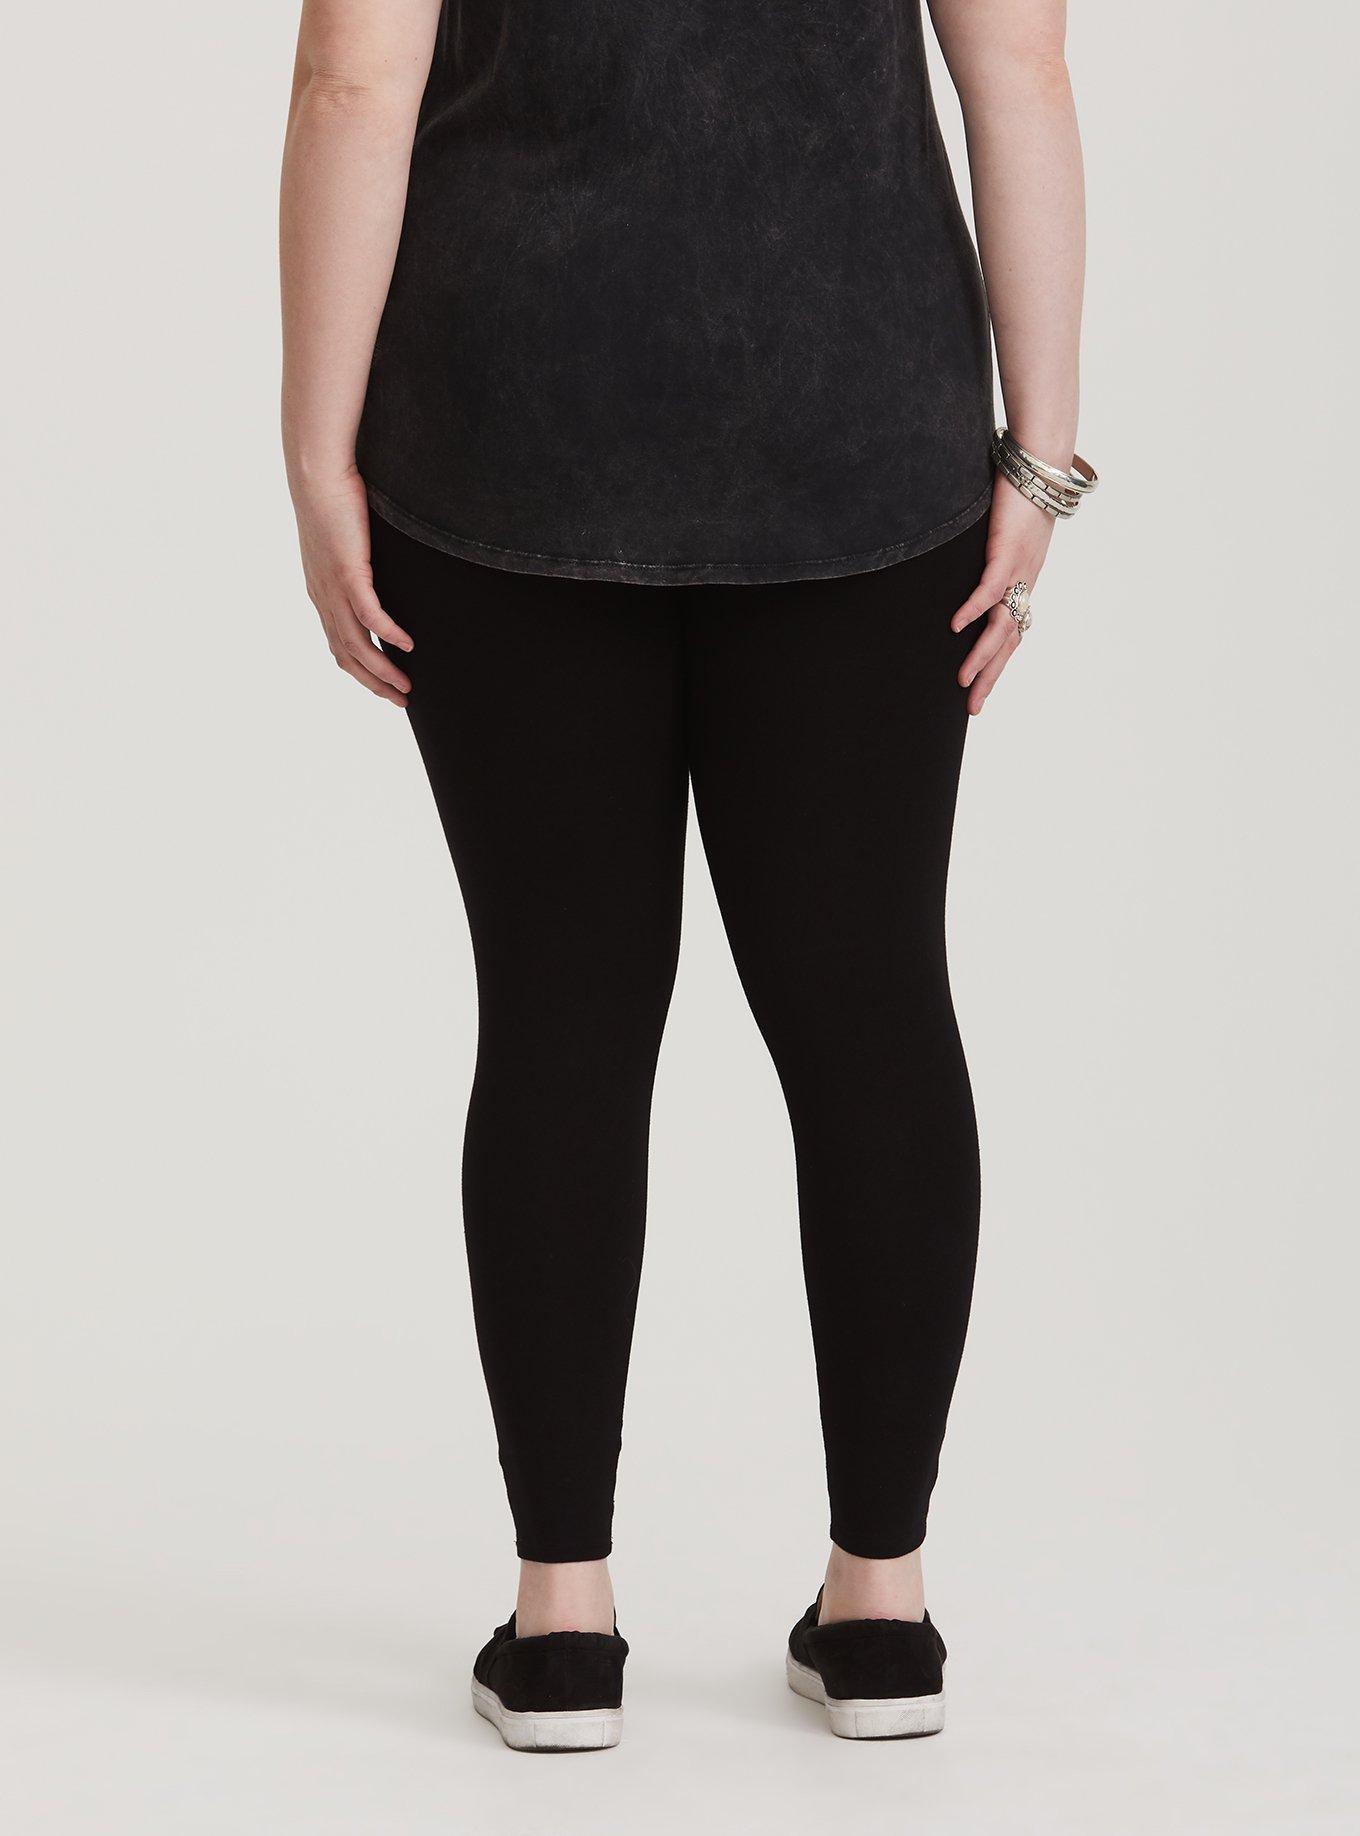 Give Thanks - Women's Plus Size 3X-5X Leggings – Apple Girl Boutique